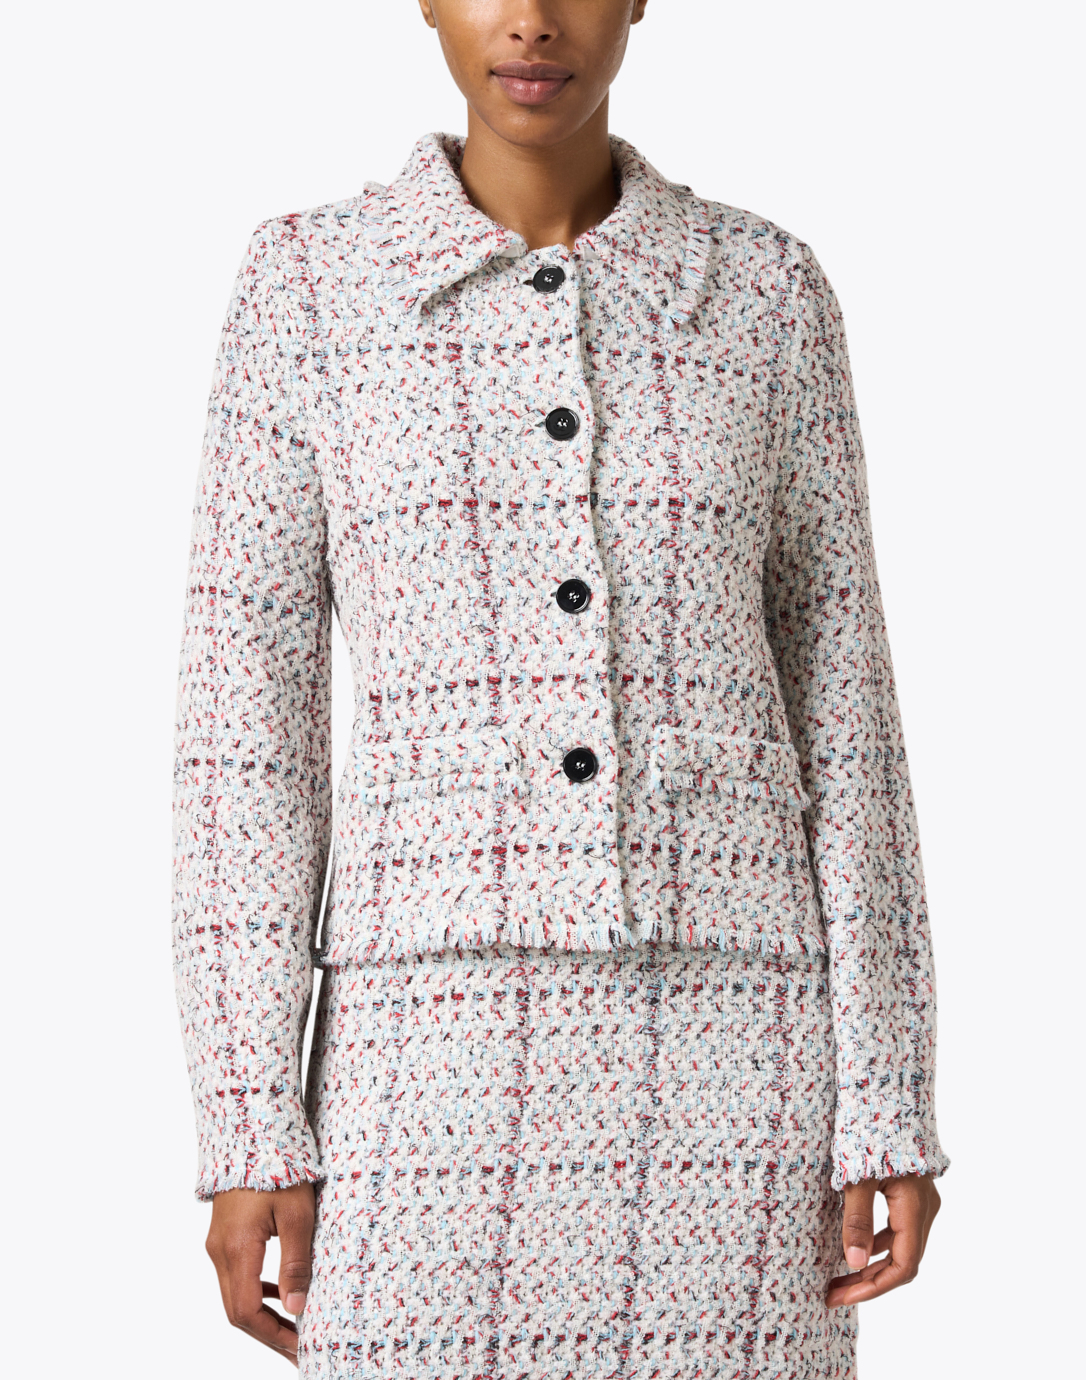 Women's Chanel-Style Tweed Jacket - Extra Length and Fringe / Gray